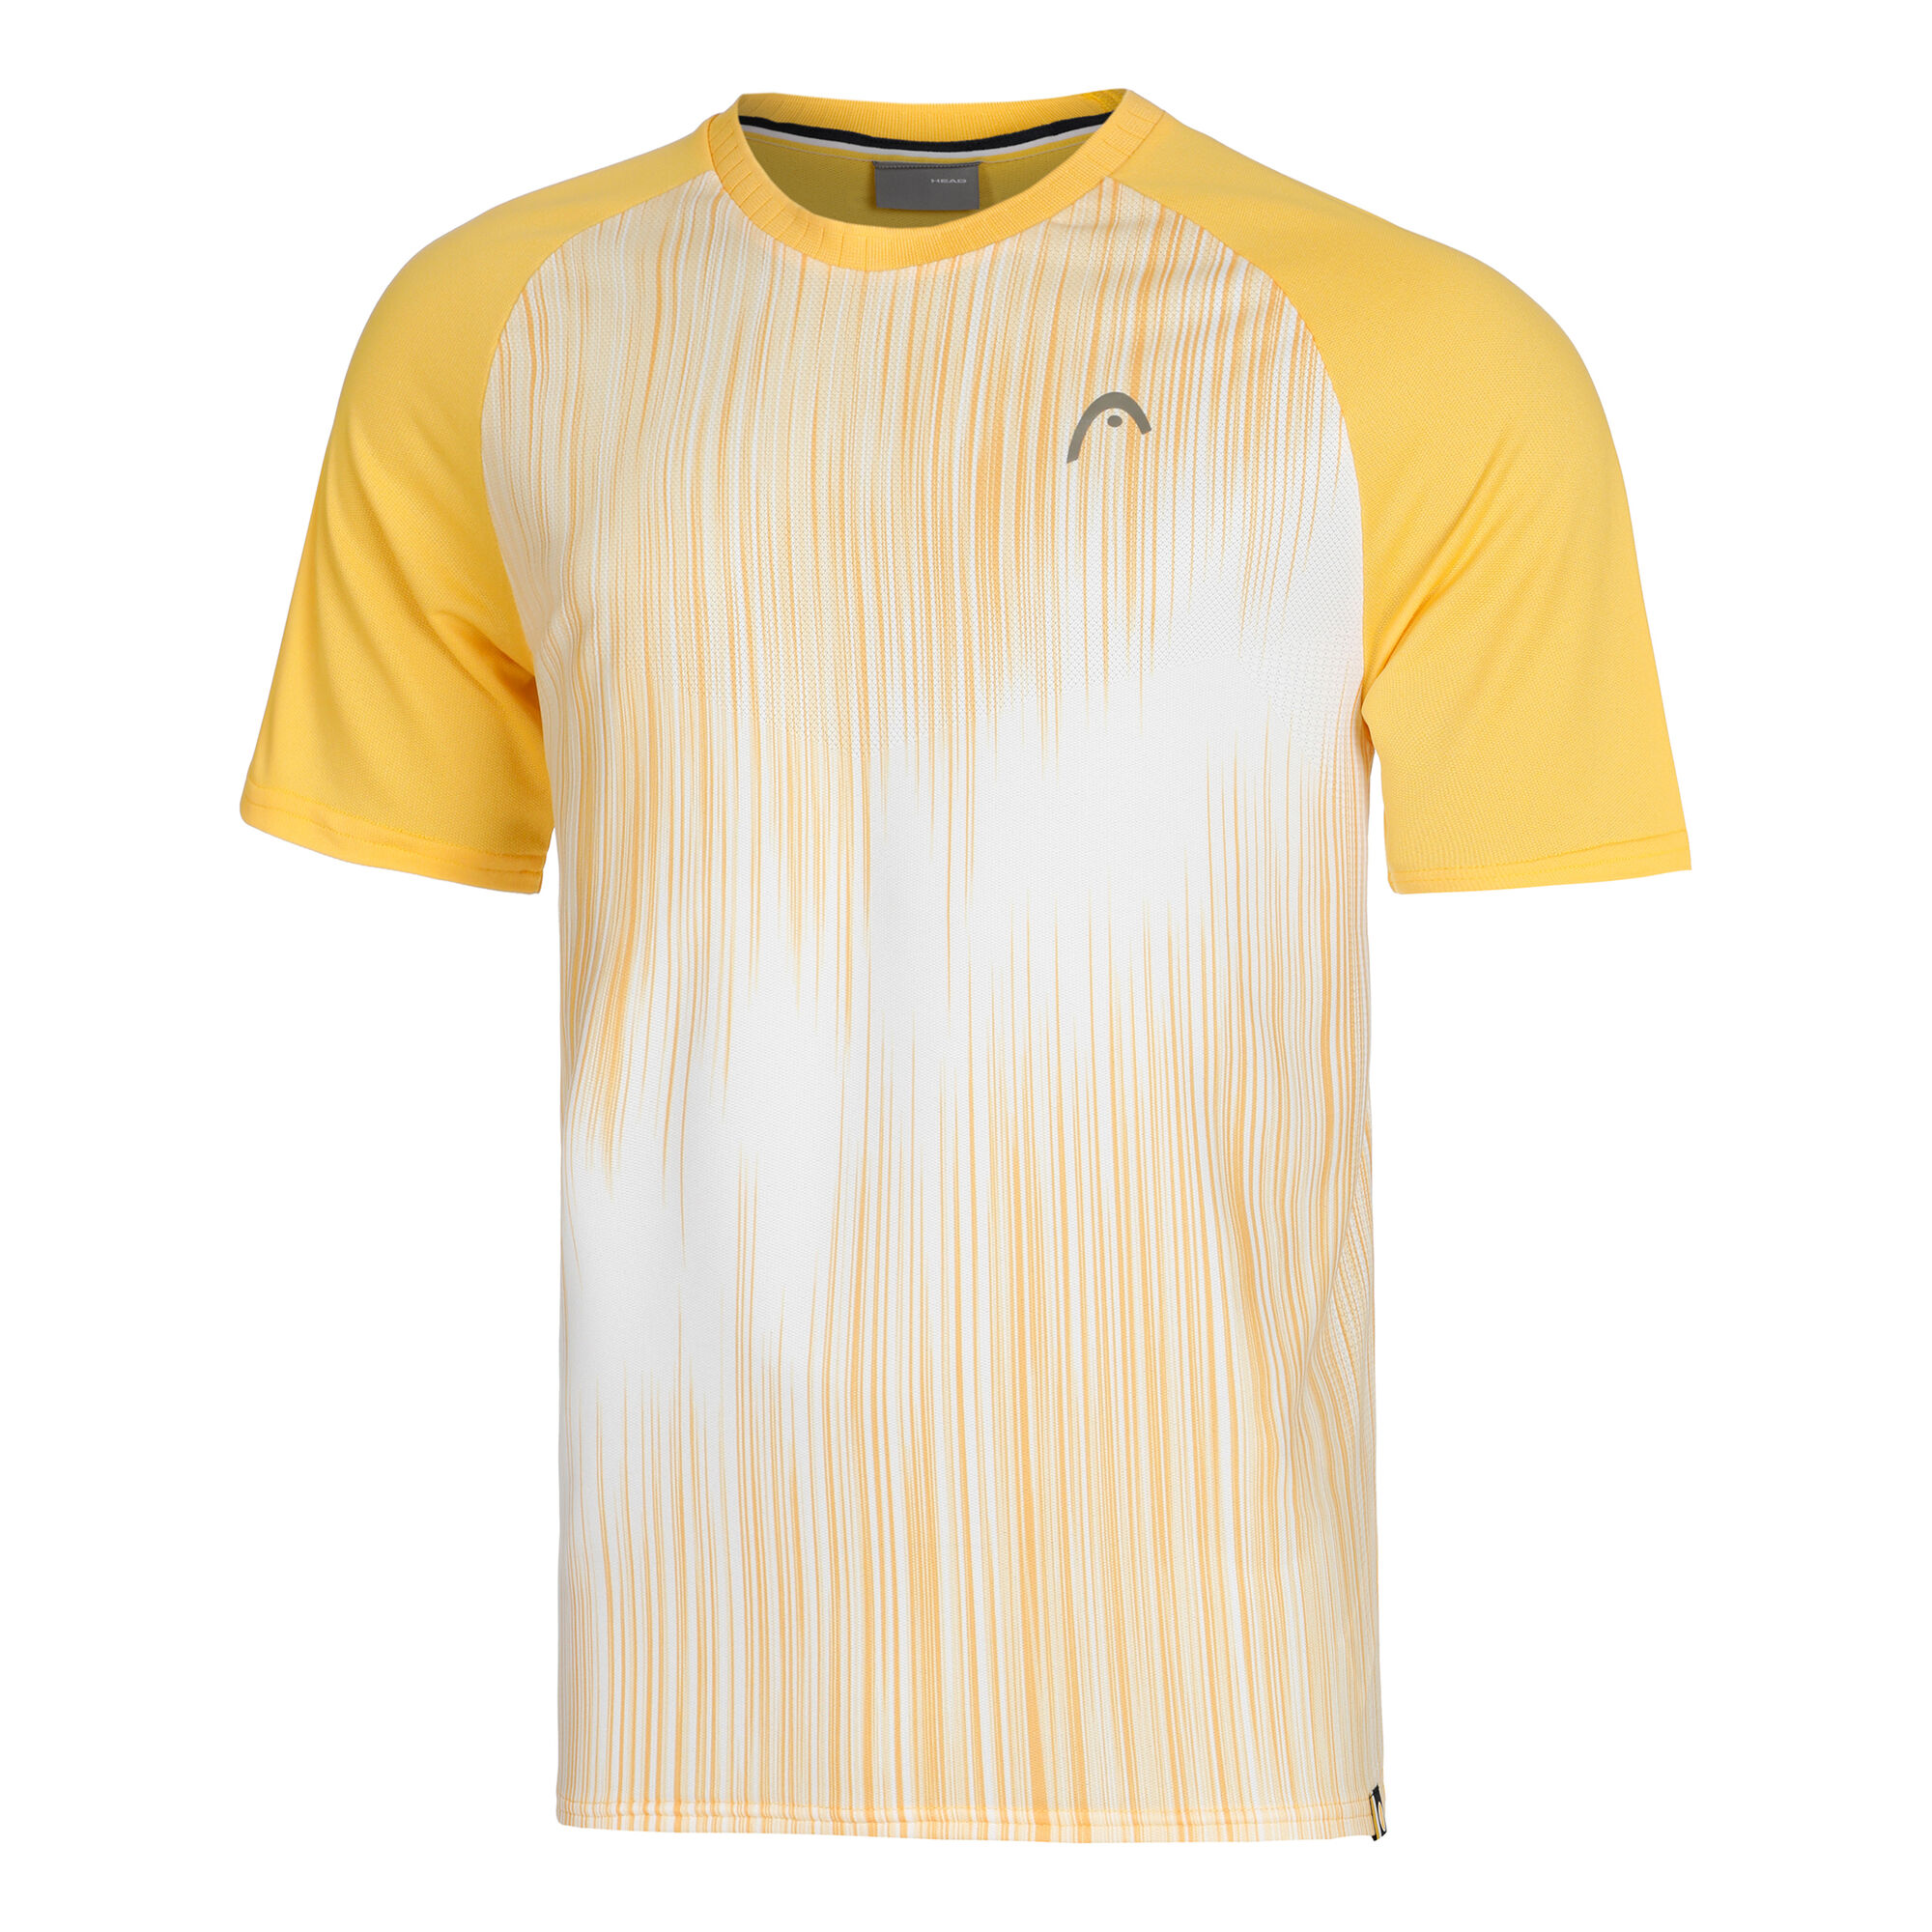 Buy HEAD Performance T-Shirt Men Golden Yellow, White online